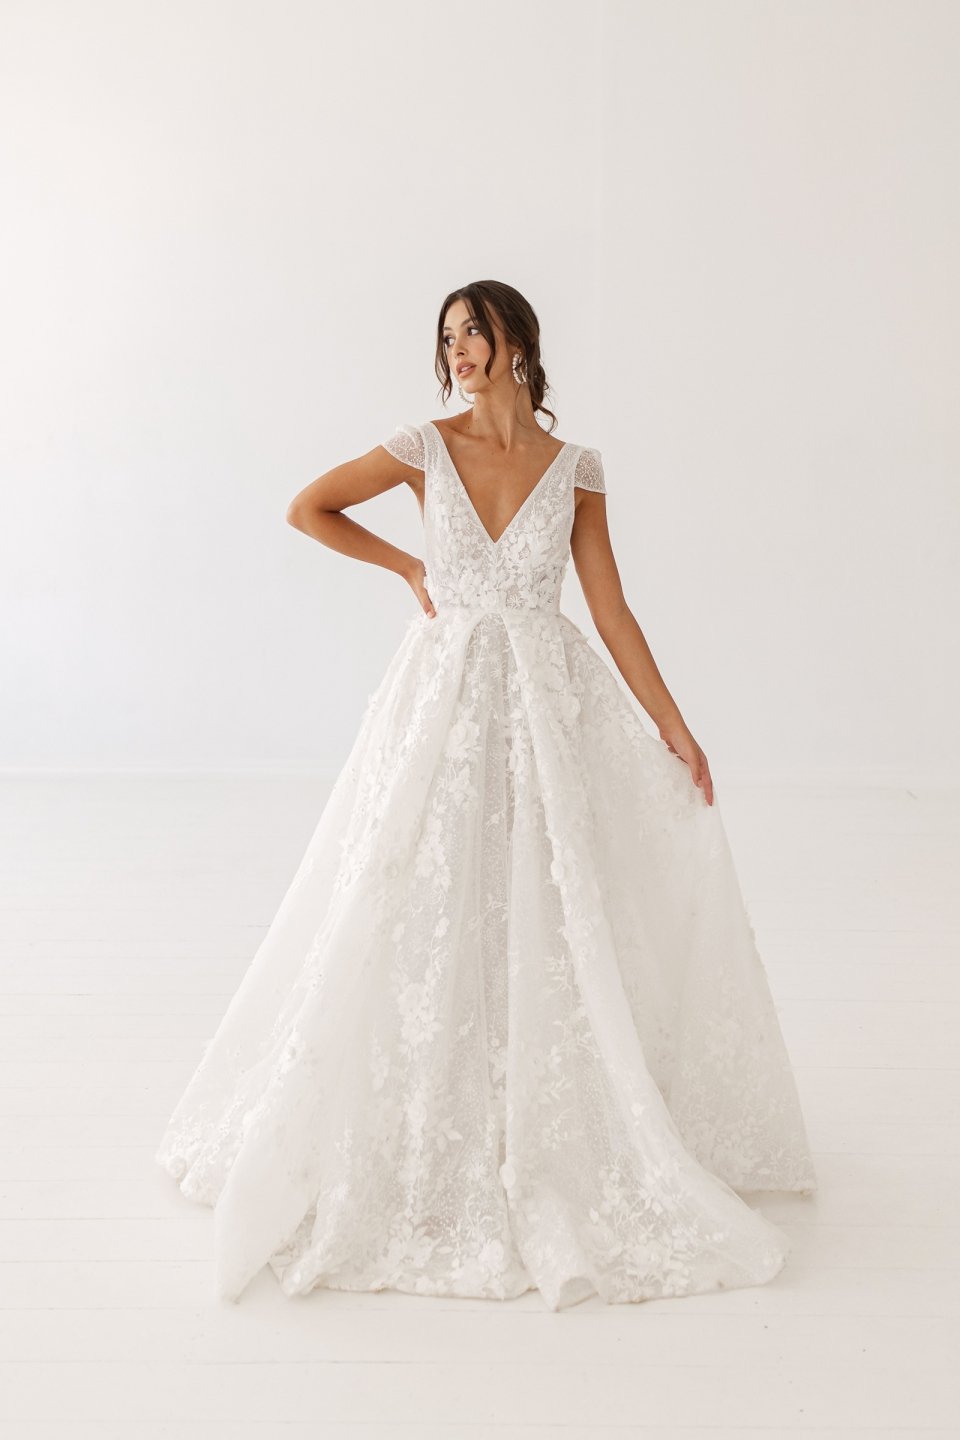 blanc-de-blanc-bridal-boutique-pittsburgh-cleveland-dress-wedding-gown-DARLING_CheribyOui.jpeg